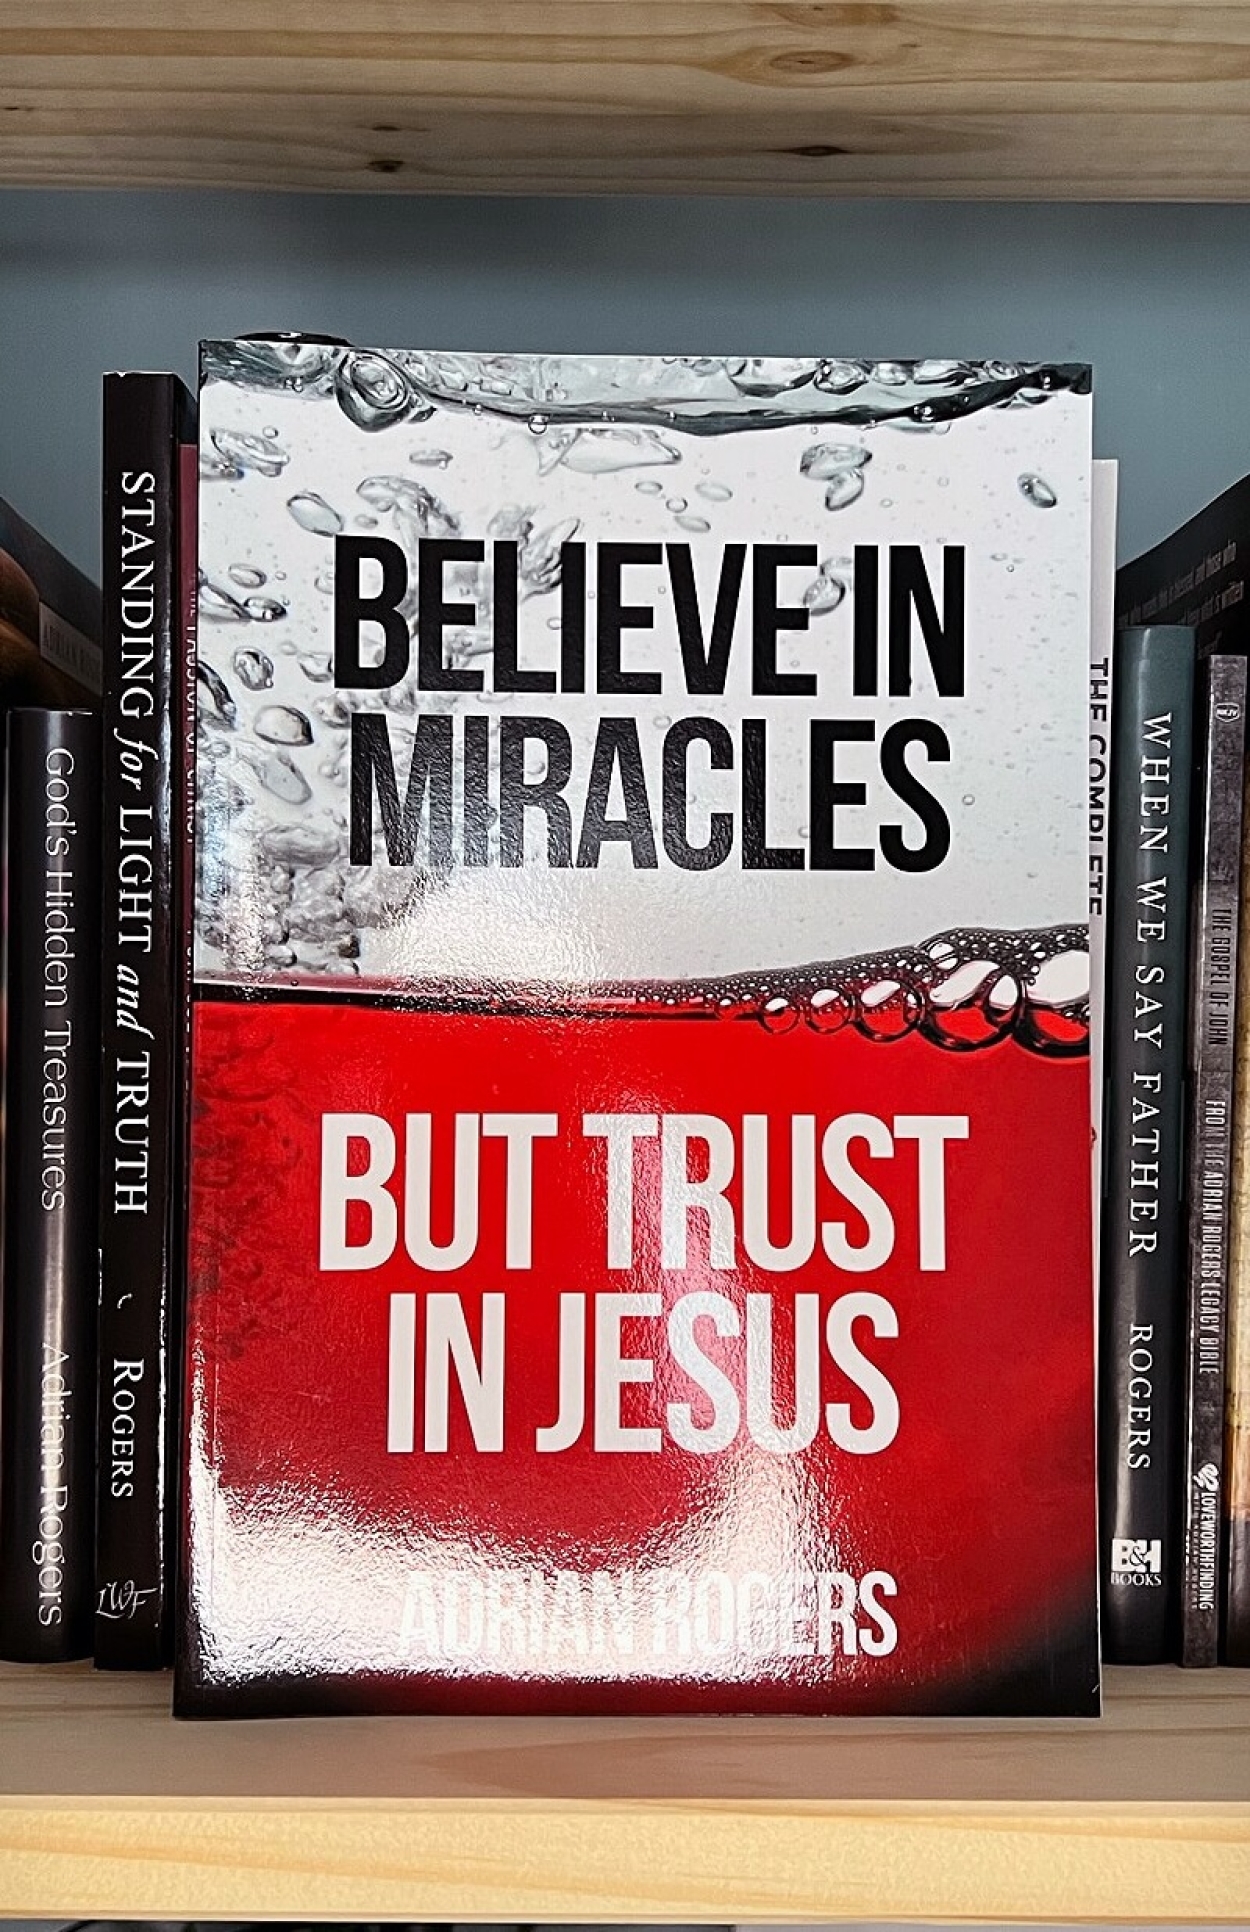 B105 believe in miracles but trust in jesus book BOOKSHELF